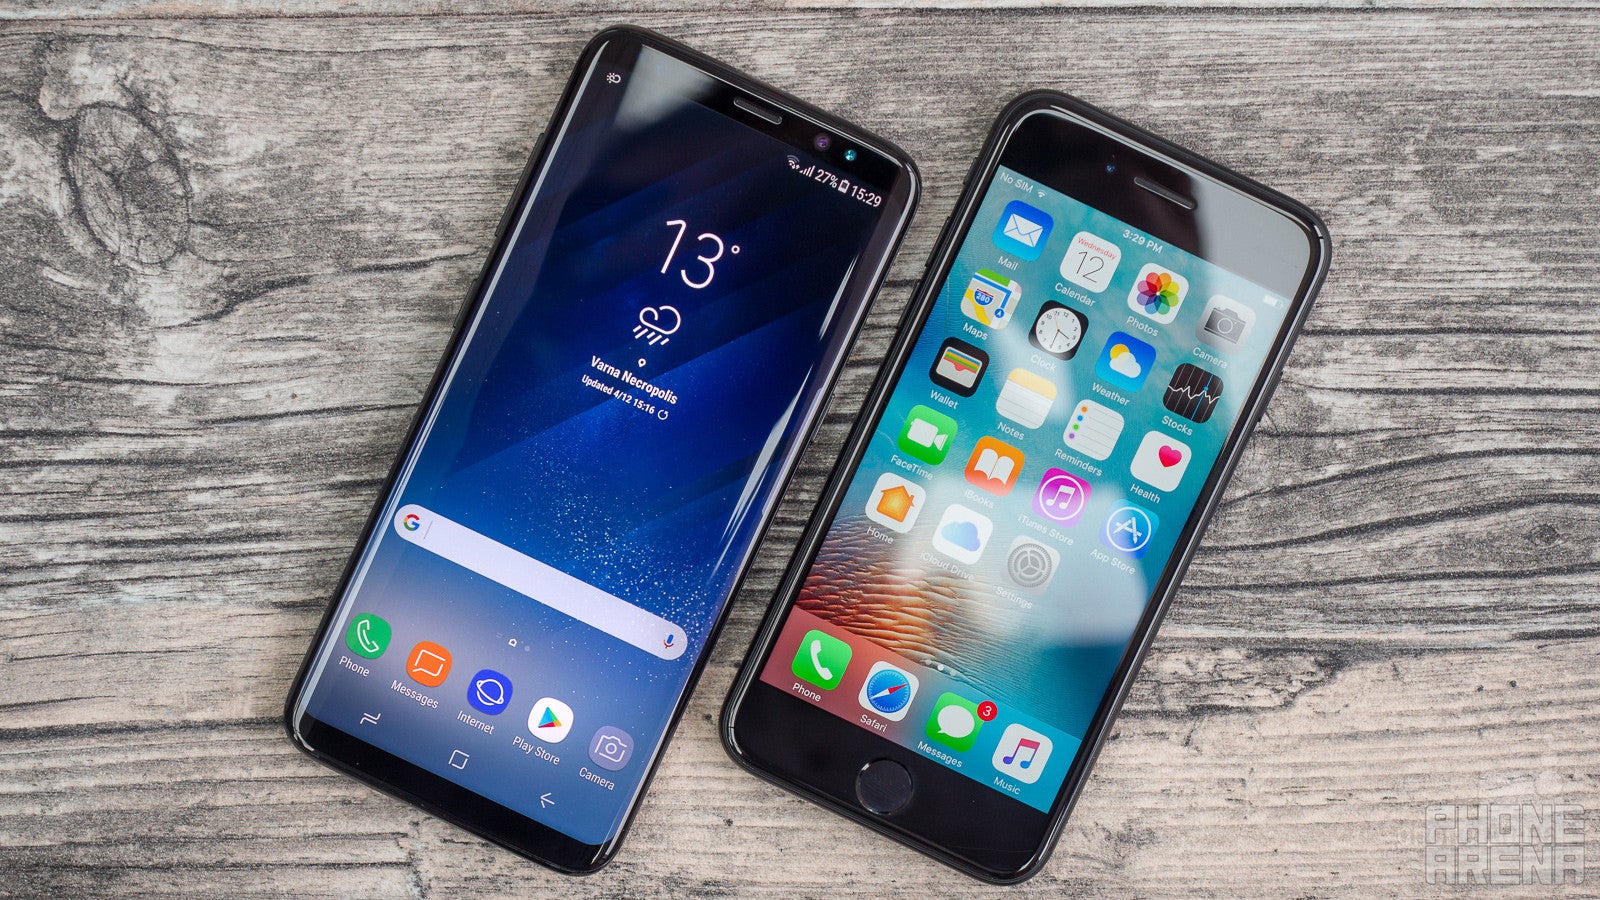 Samsung Galaxy S8 vs Apple iPhone 7